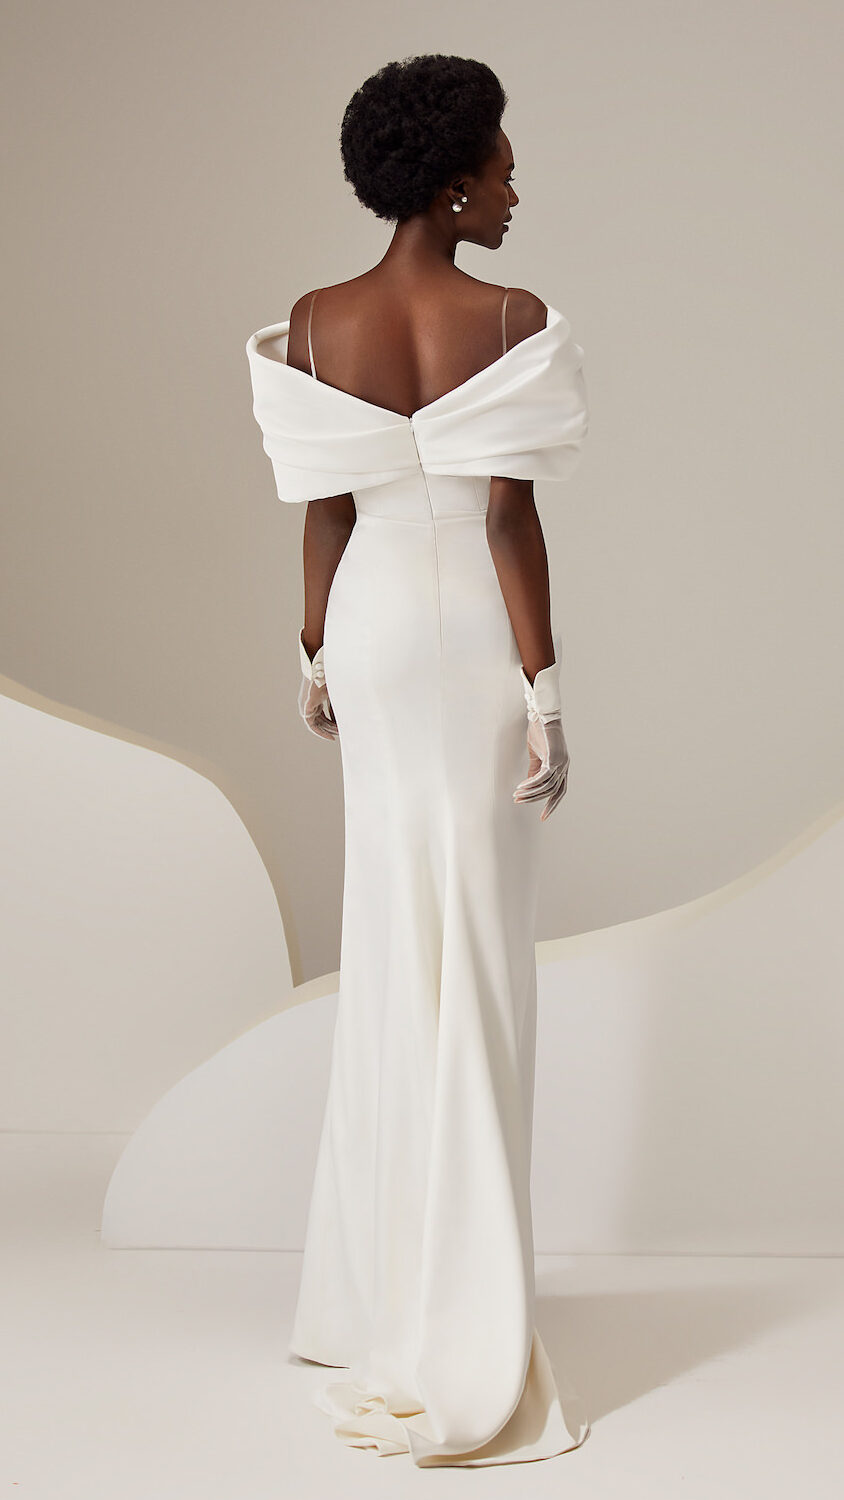 2022 Wedding Dress Trends by Milla Nova - Muse white lace day 22620